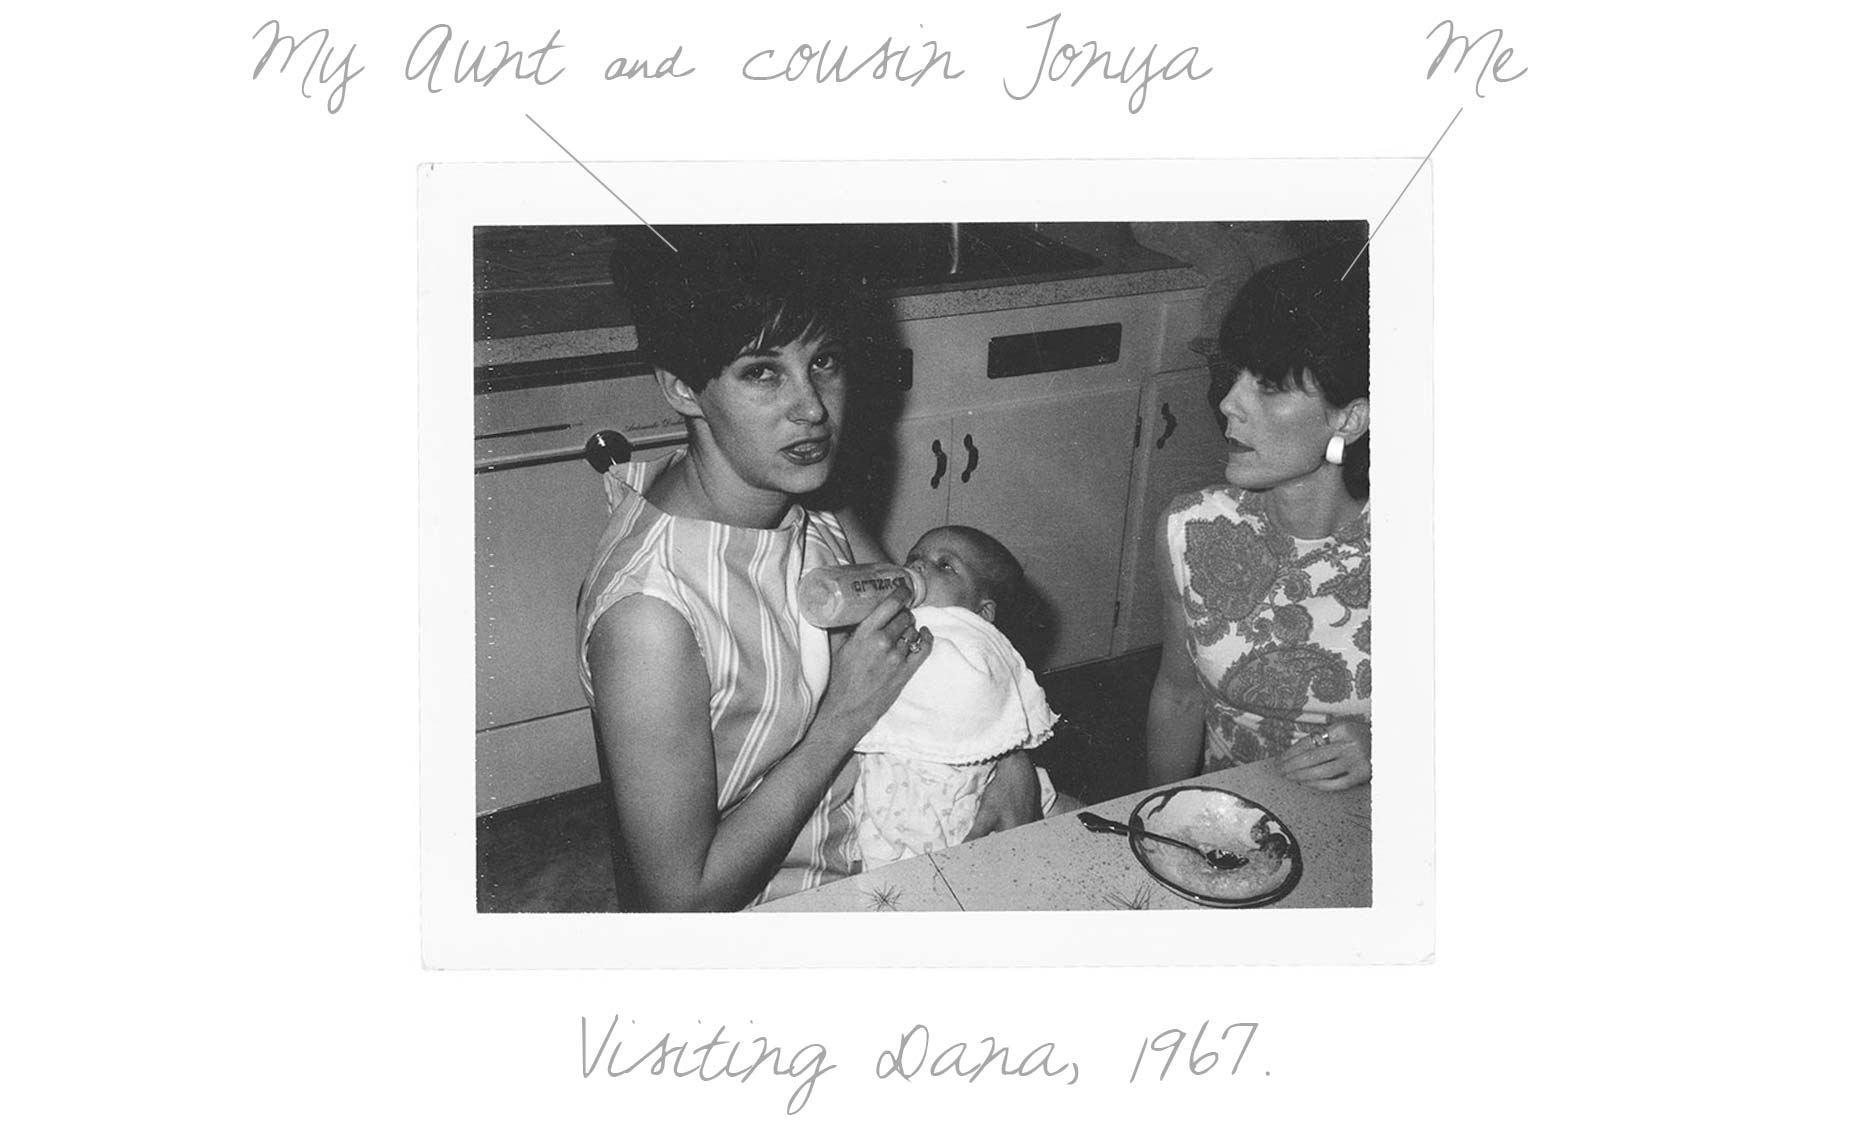 Visiting Dana and Tonya, 1967